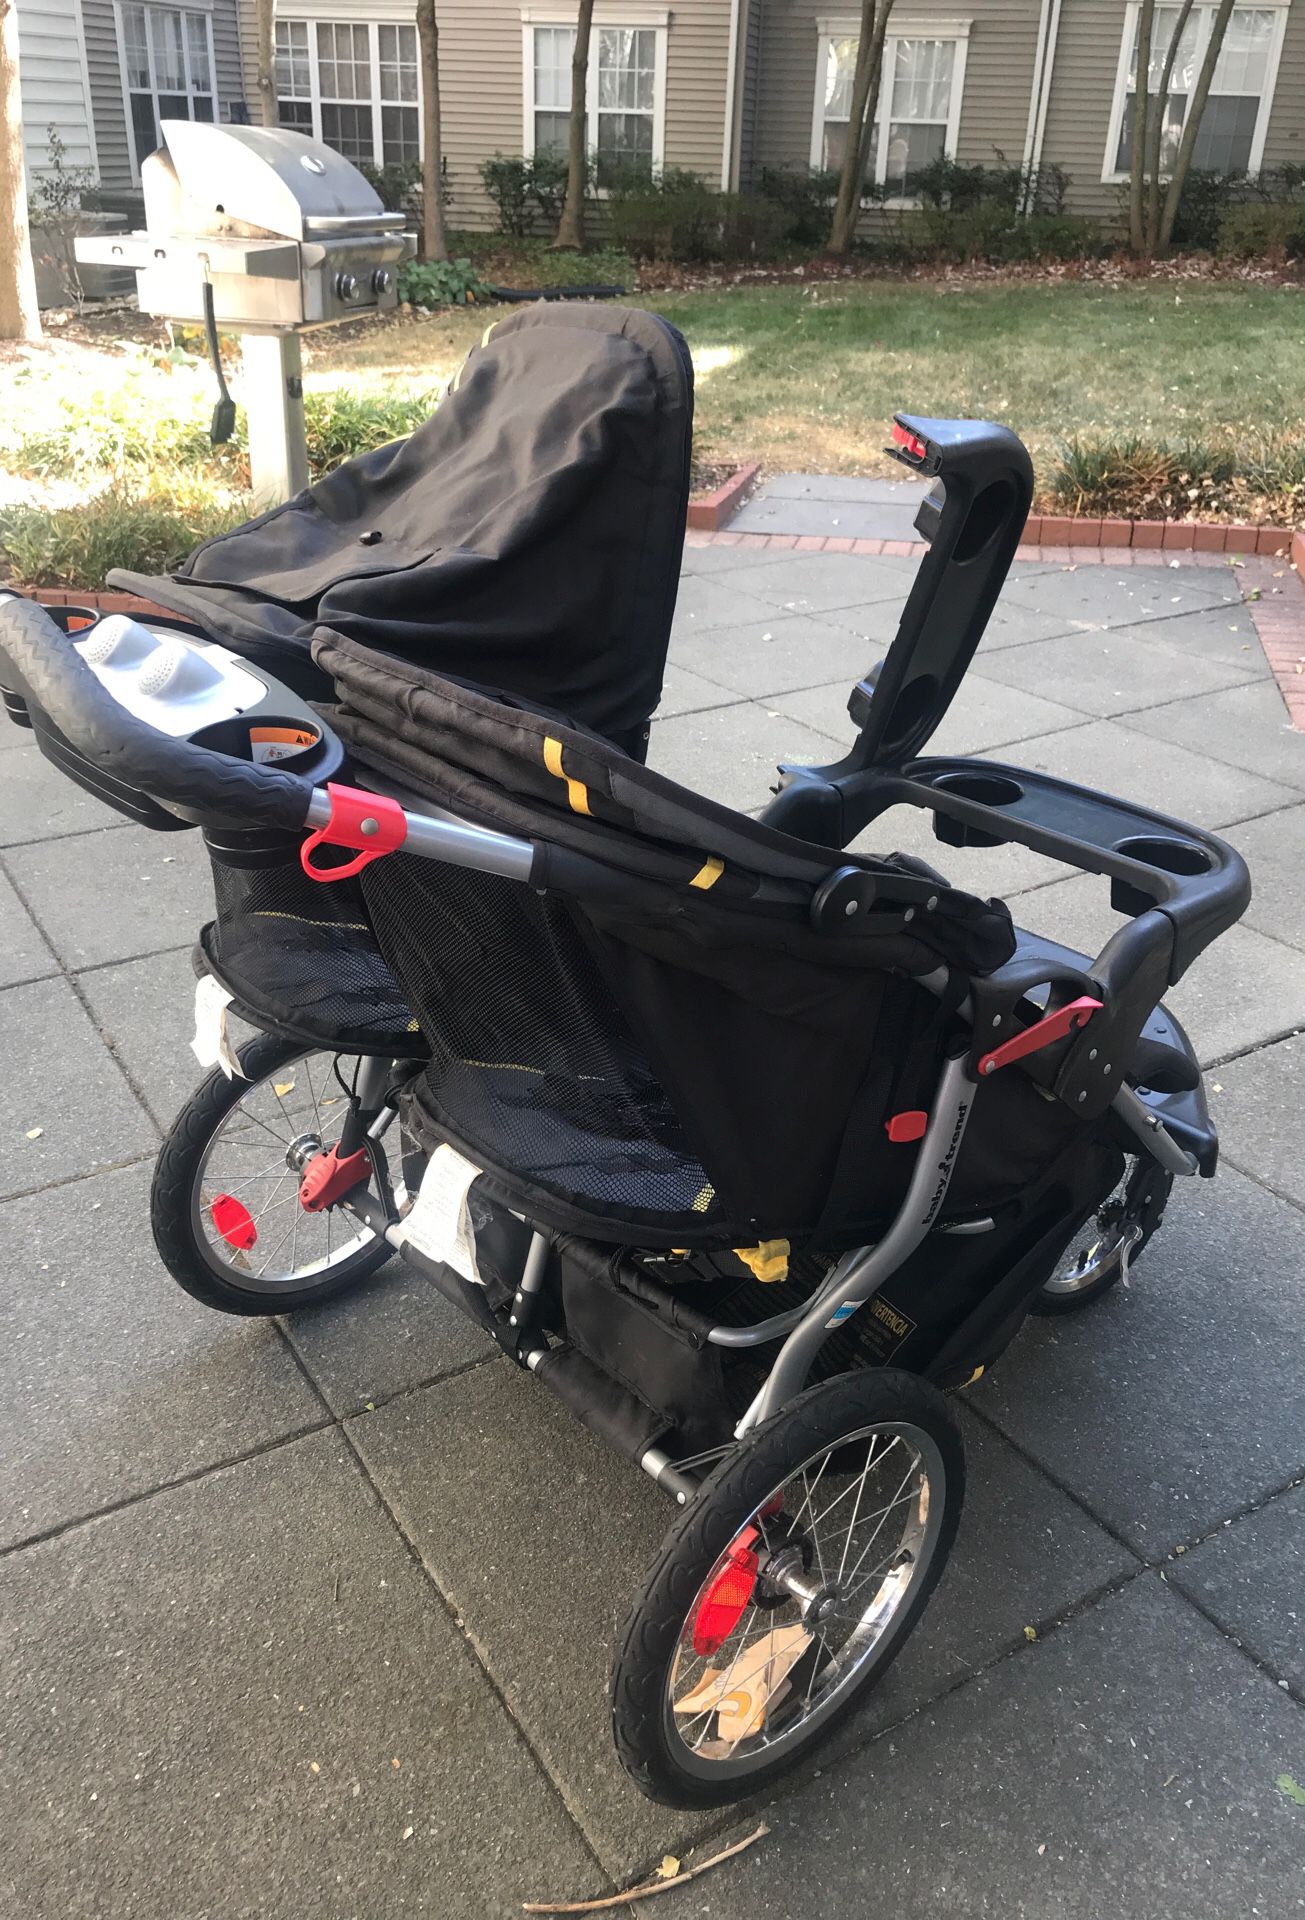 Double Baby Stroller